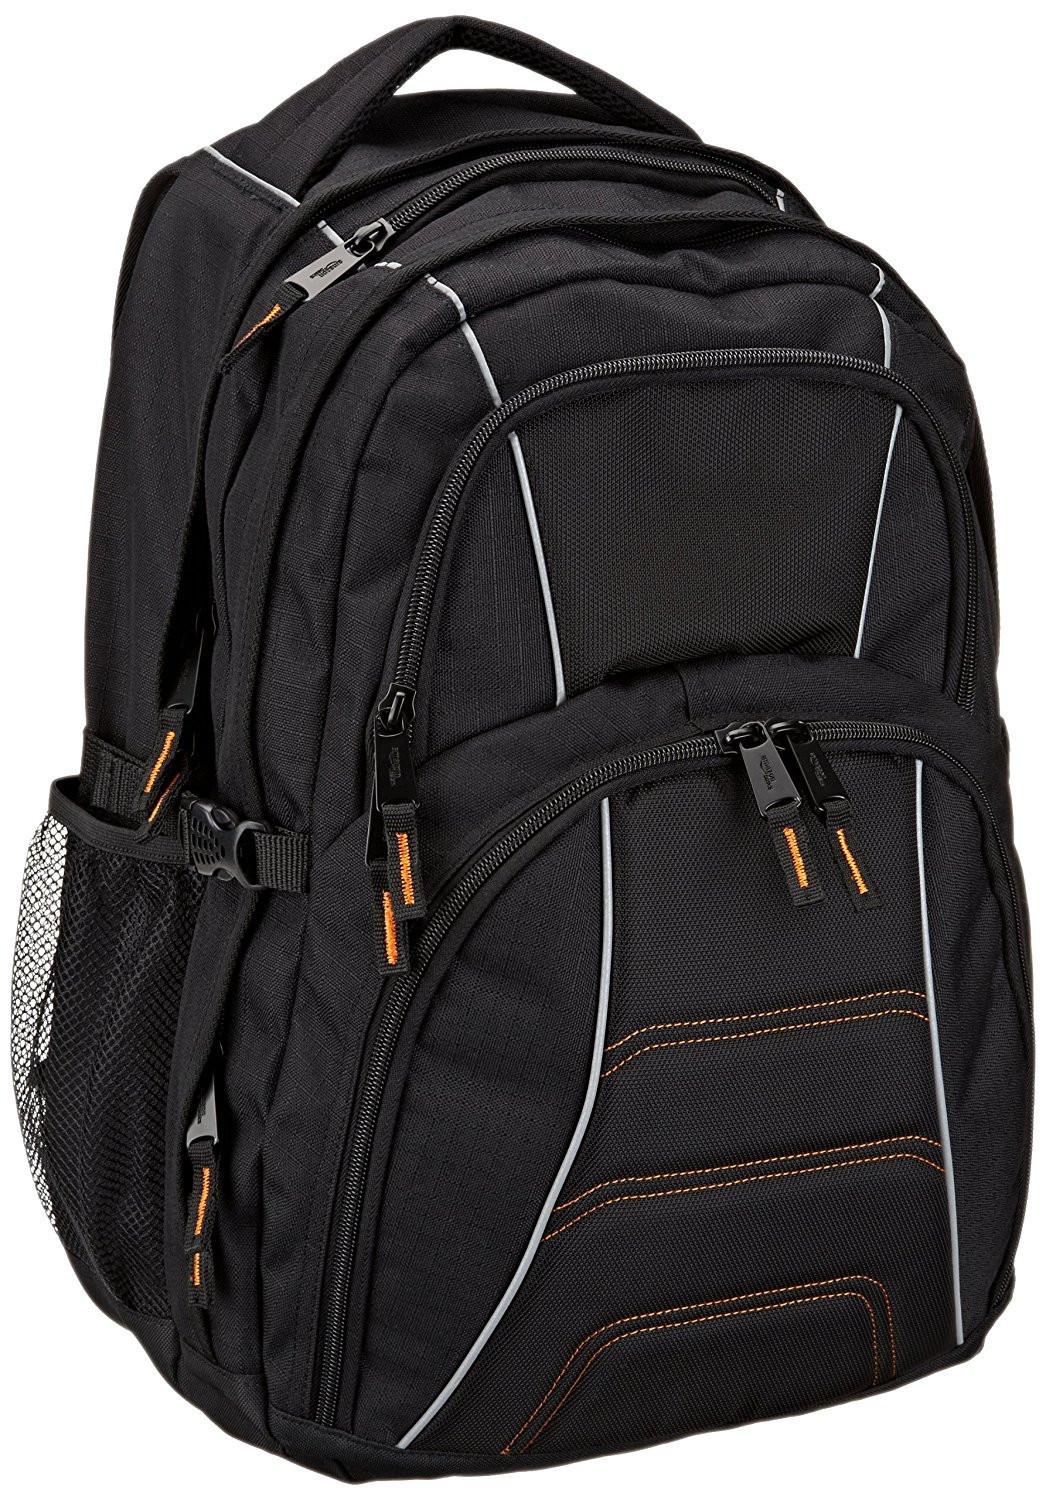 AmazonBasics-Backpack